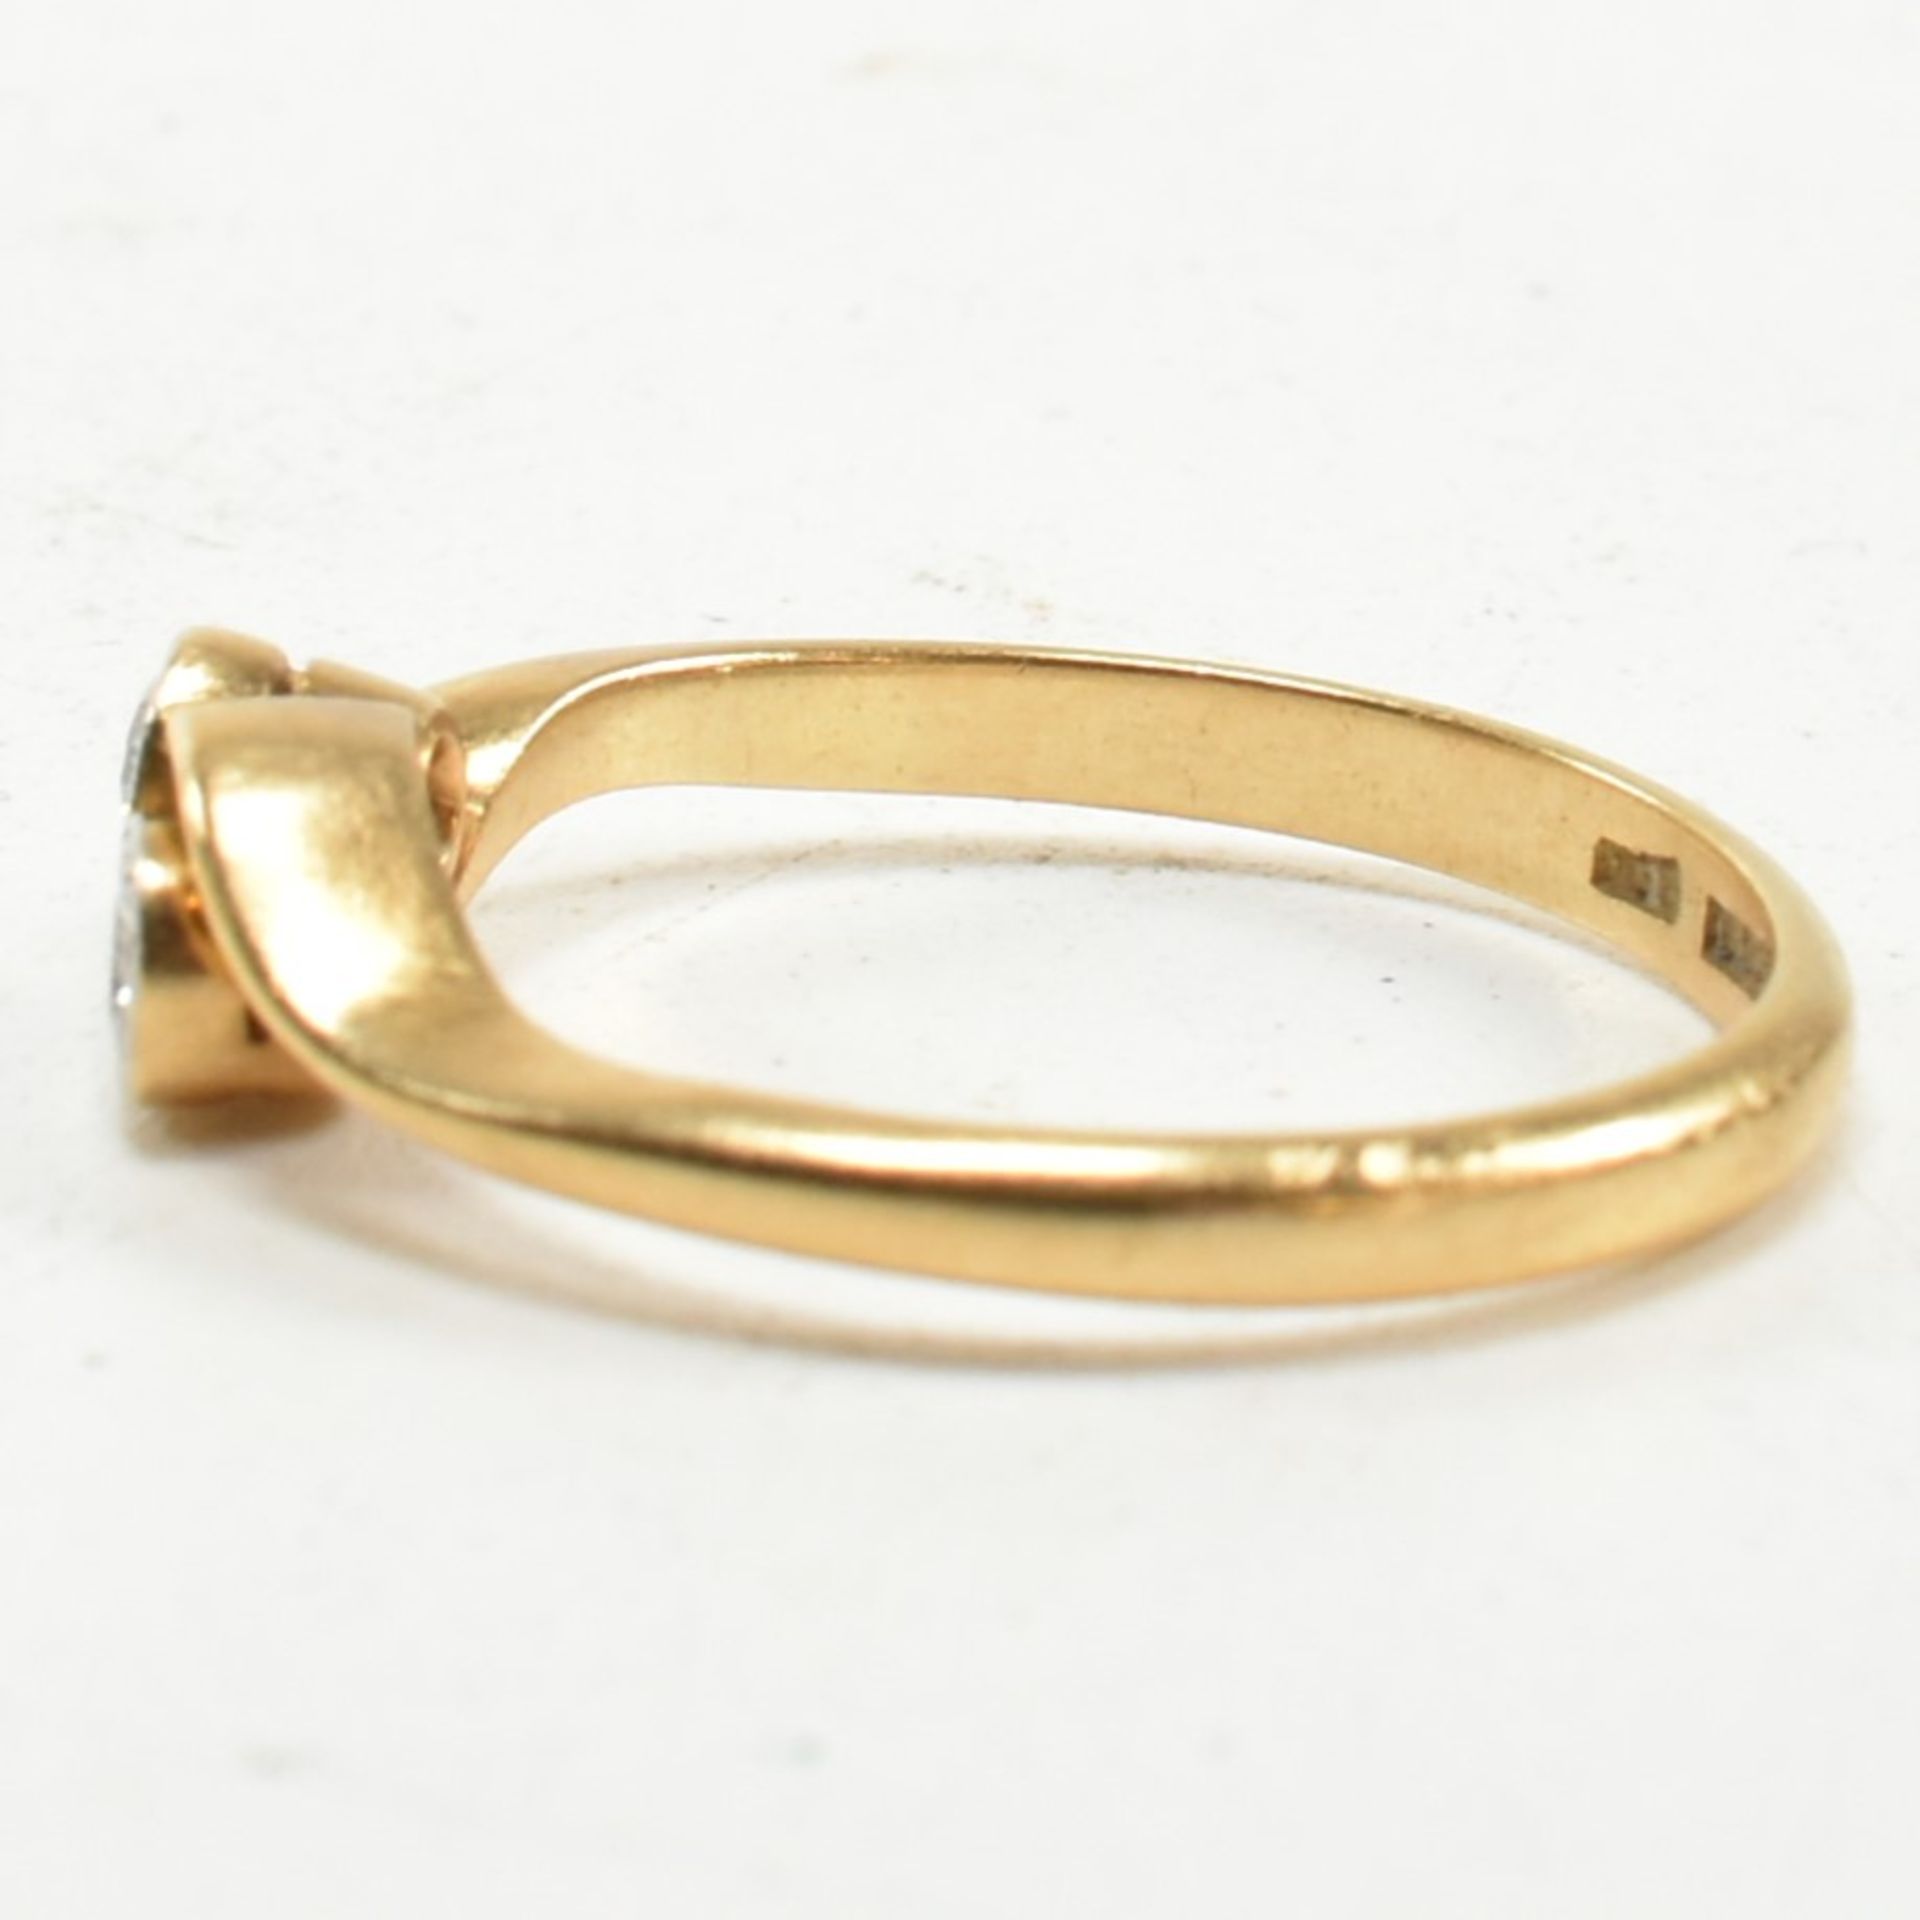 CASED 18CT GOLD PLATINUM & DIAMOND CROSSOVER RING - Image 4 of 8